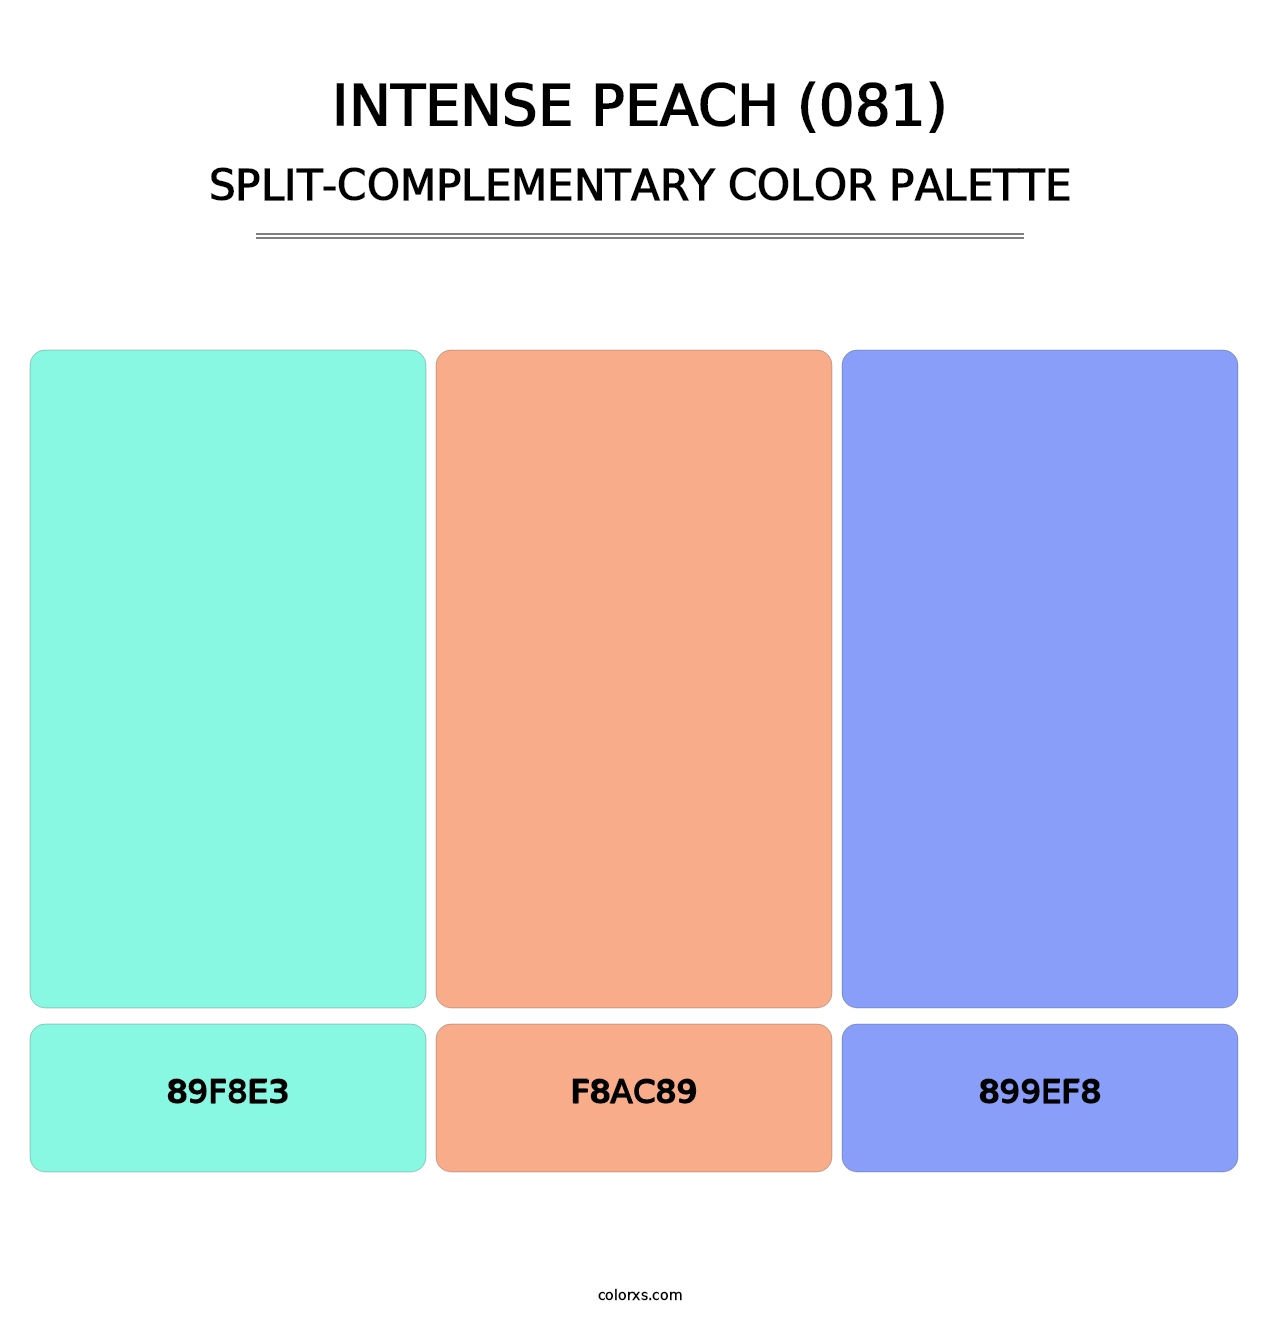 Intense Peach (081) - Split-Complementary Color Palette